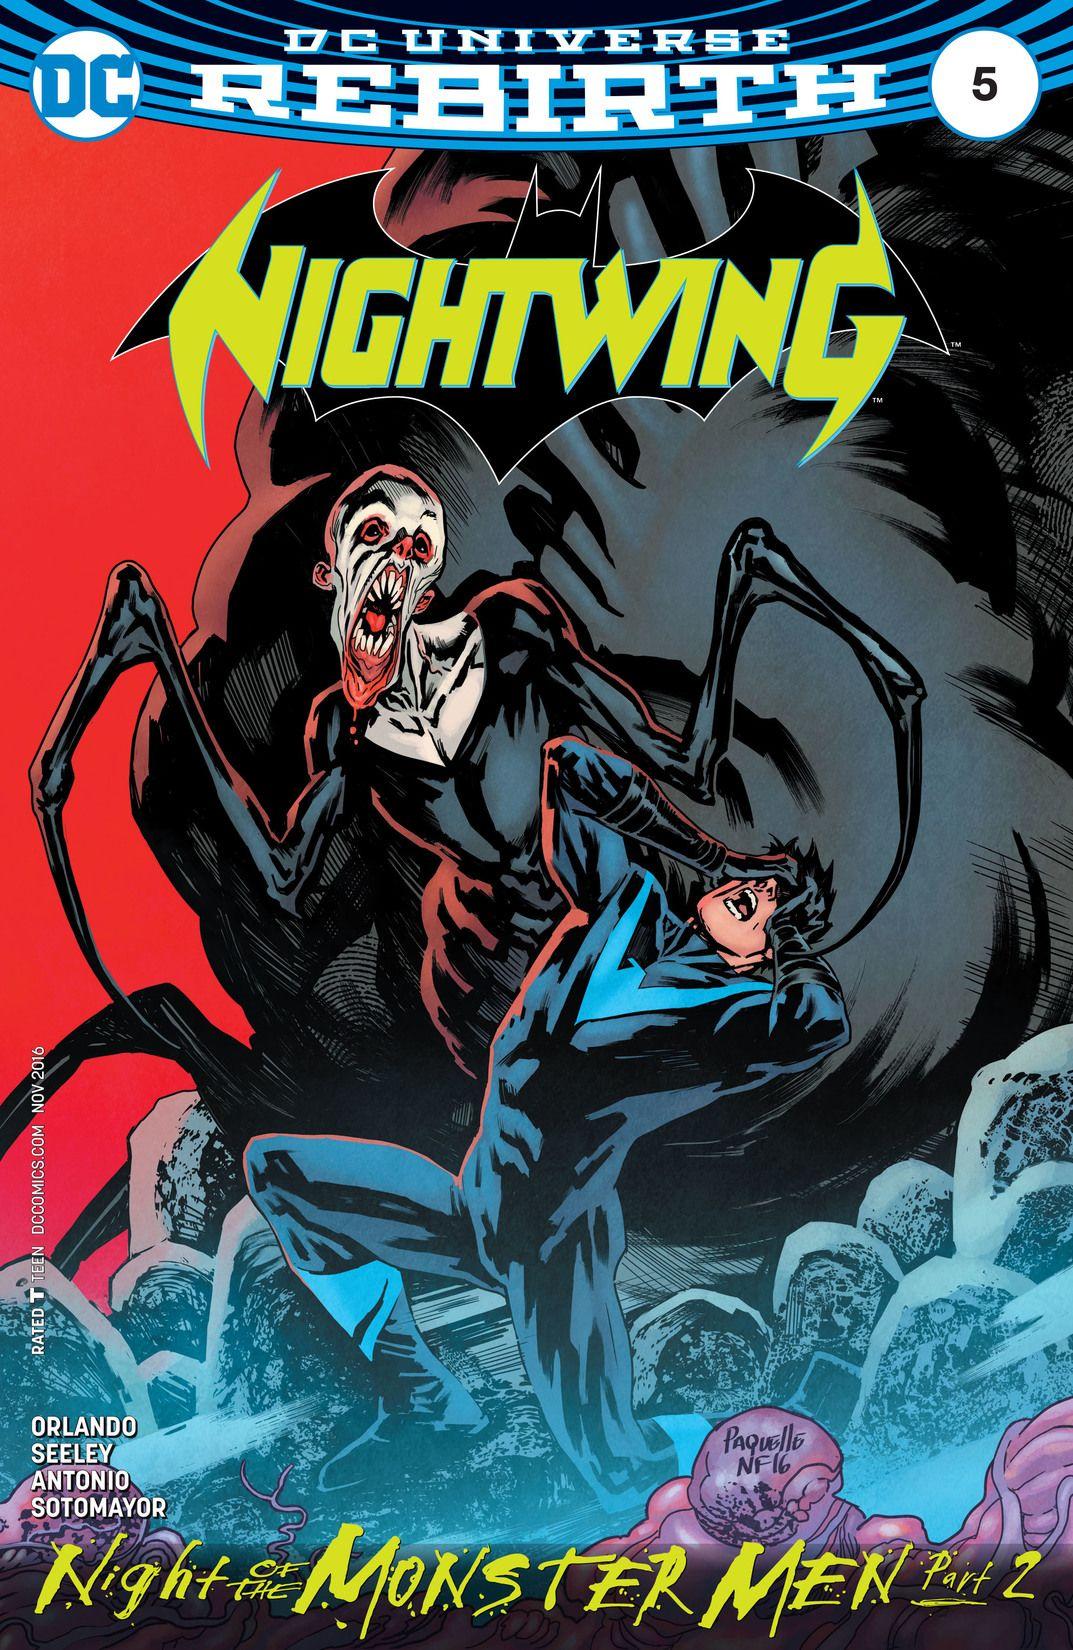 Nightwing Vol. 4 #5